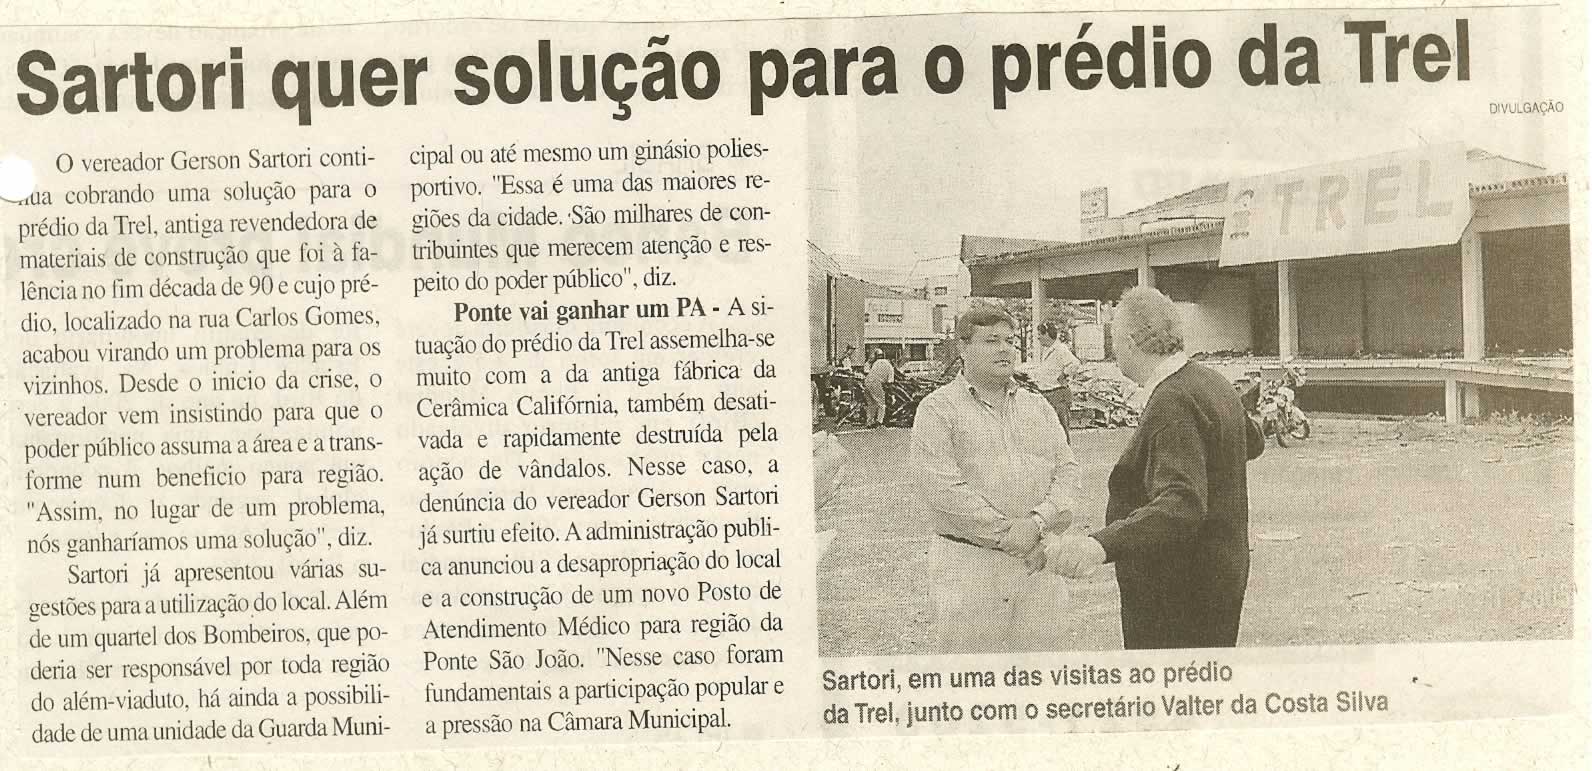 Jornal da Cidade - 10/01/2008